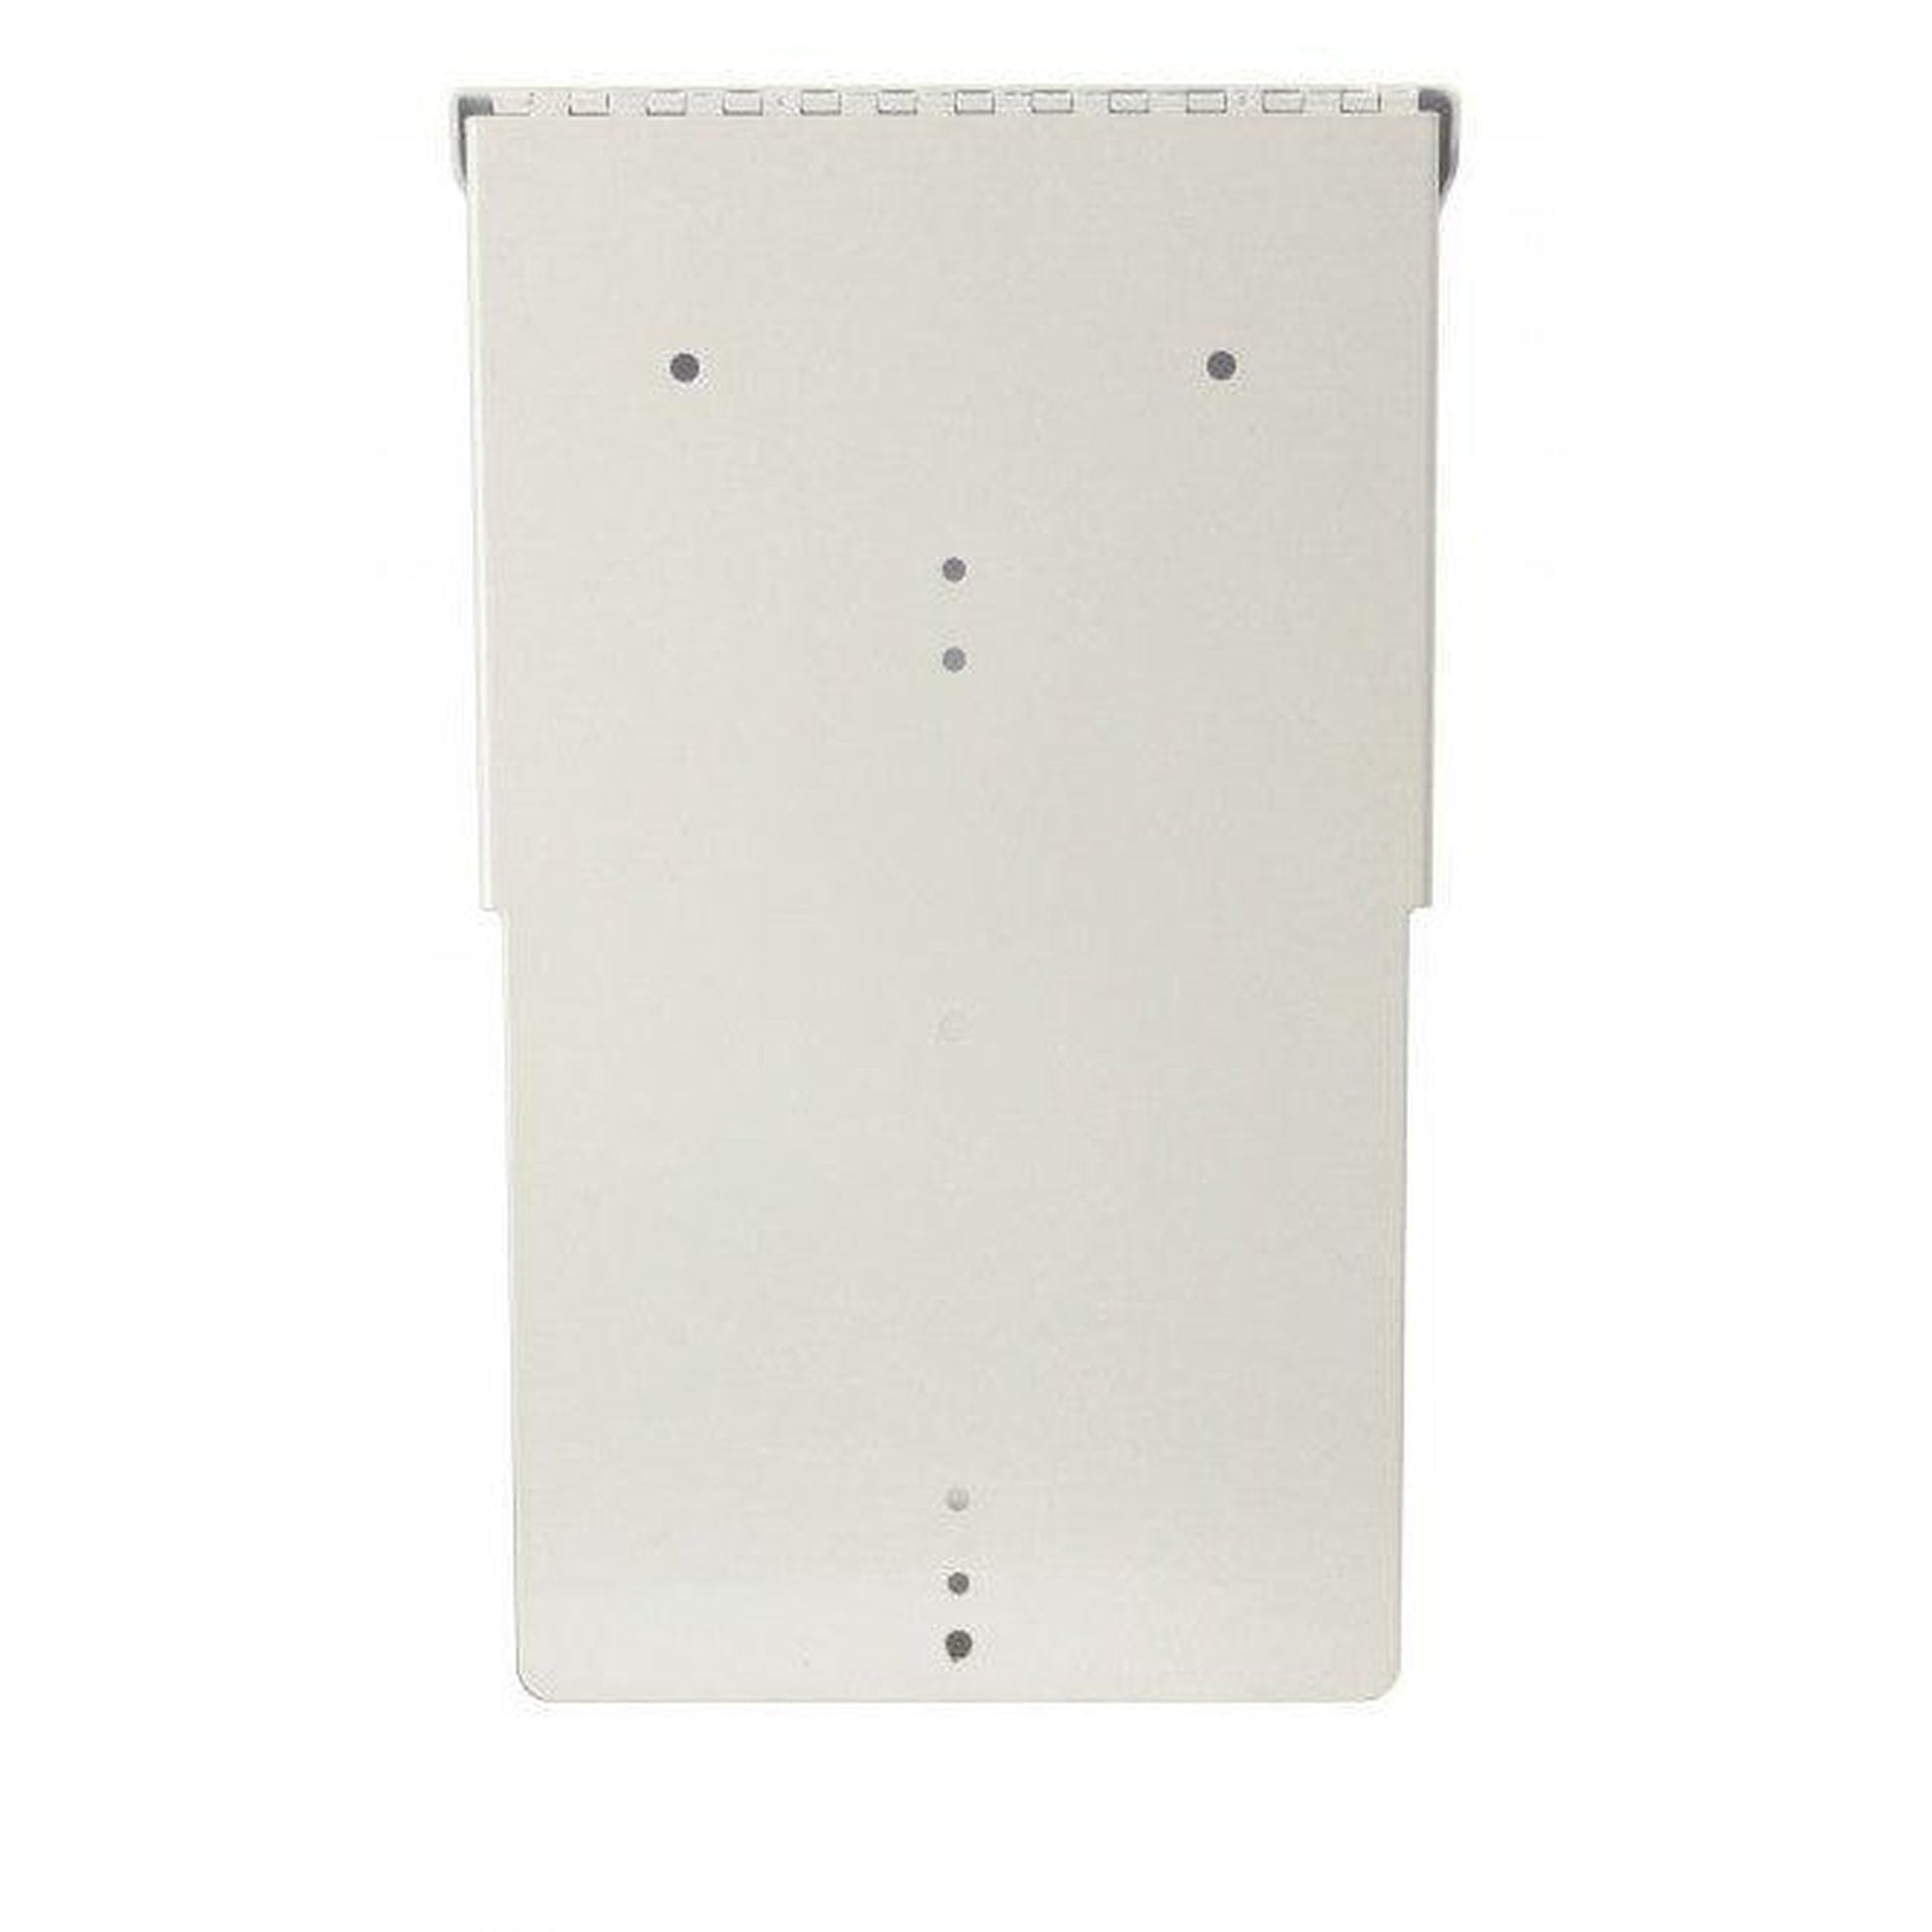 Frost 6.6 x 4.7 x 10.8 White Epoxy Powder Paper Product Dispenser